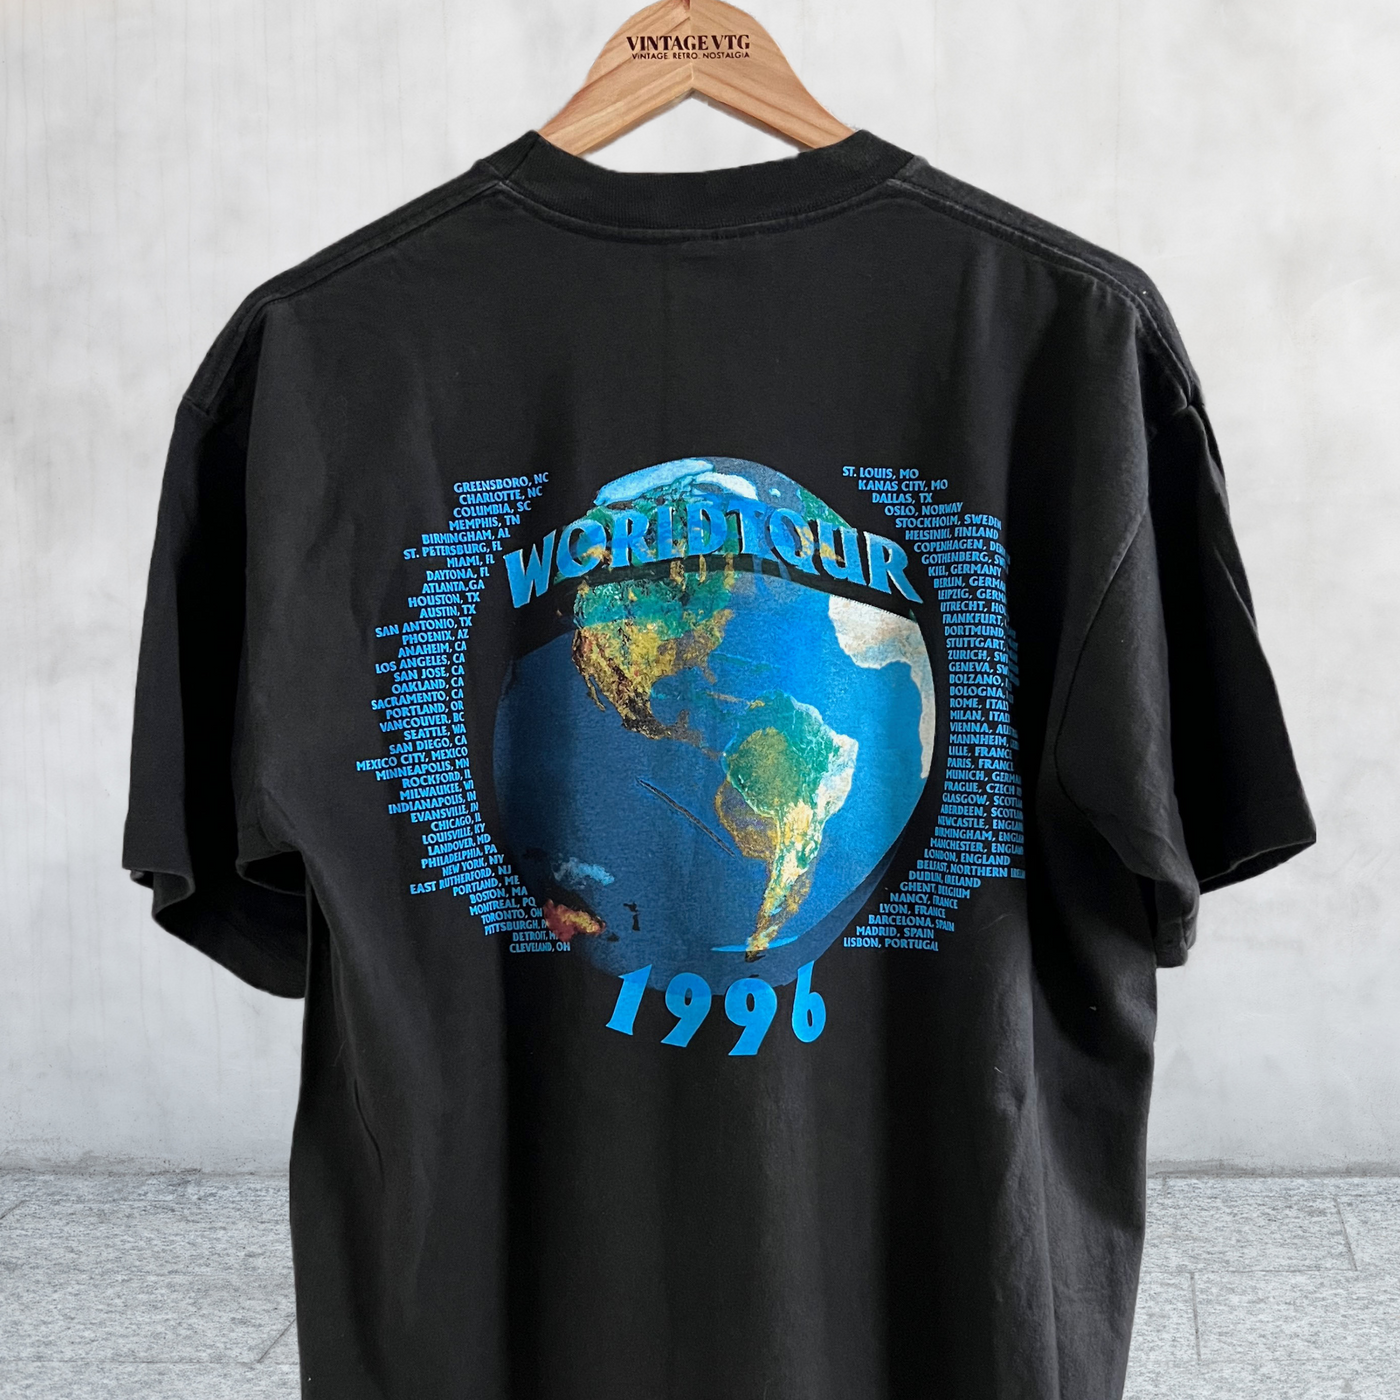 Vintage 1996 AC/DC "BALLBREAKER" Tour T-shirt. Black. XL back view